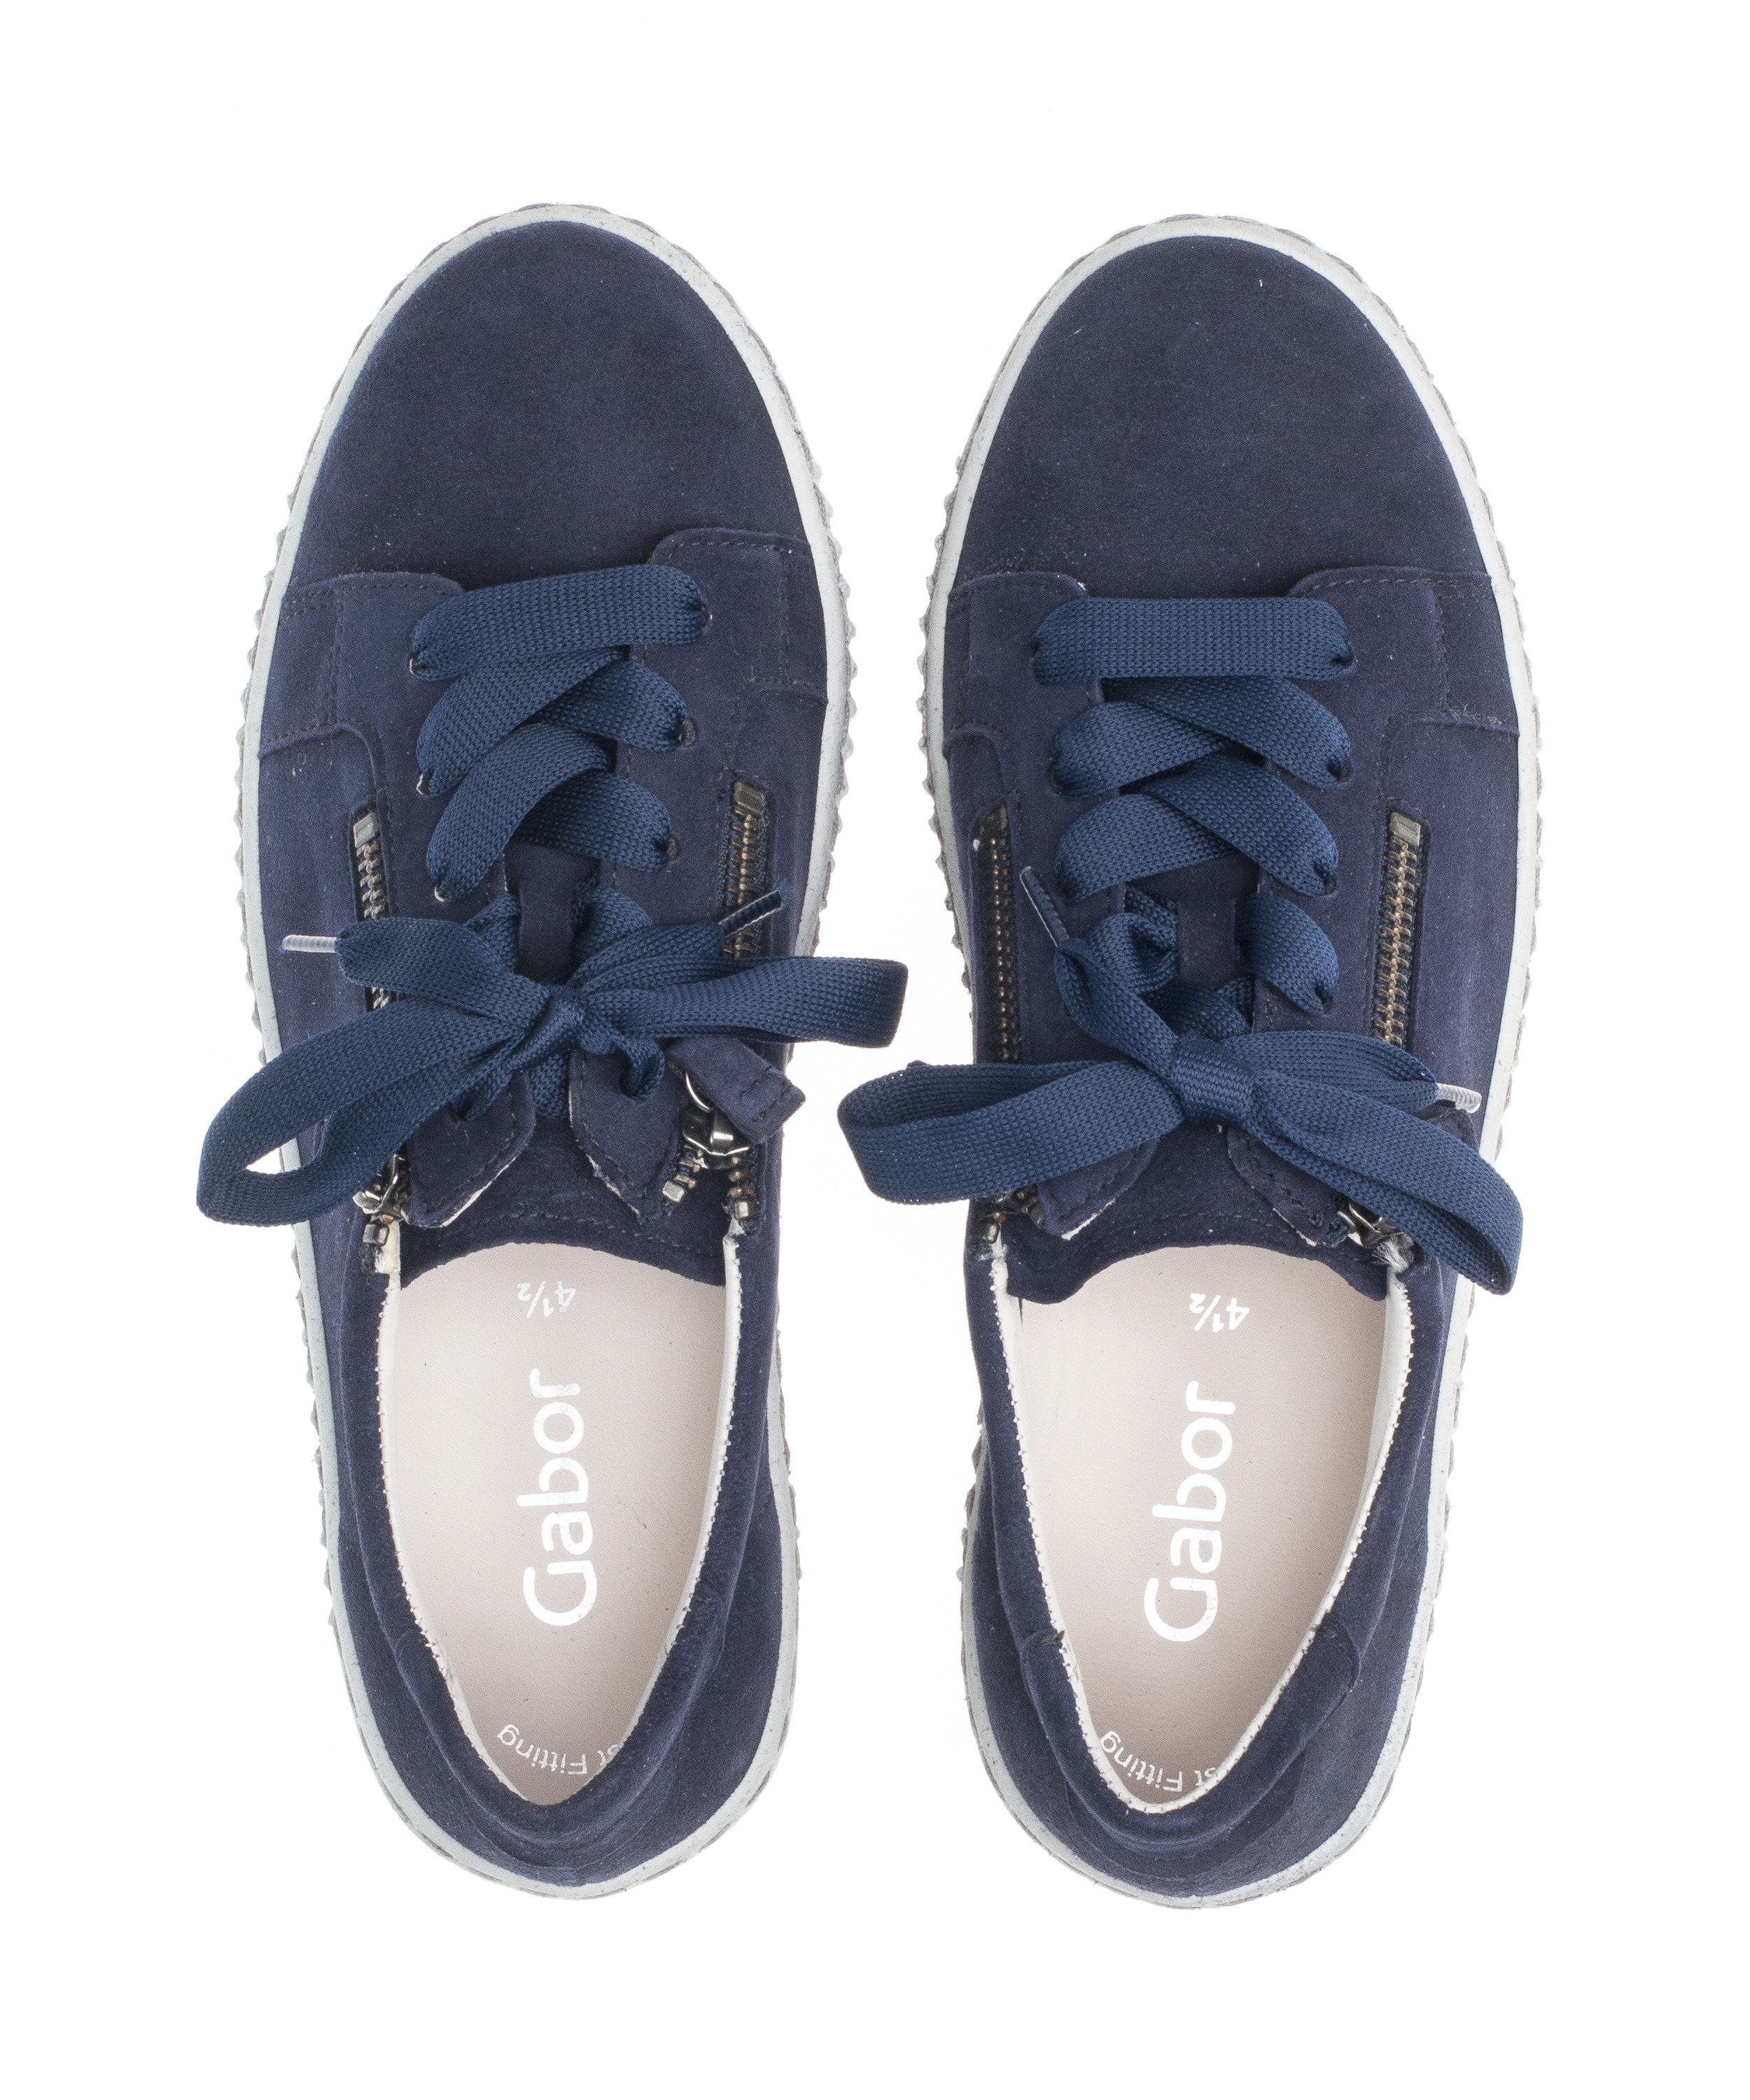 Gabor Shoes Sneaker Low - Blau Leder